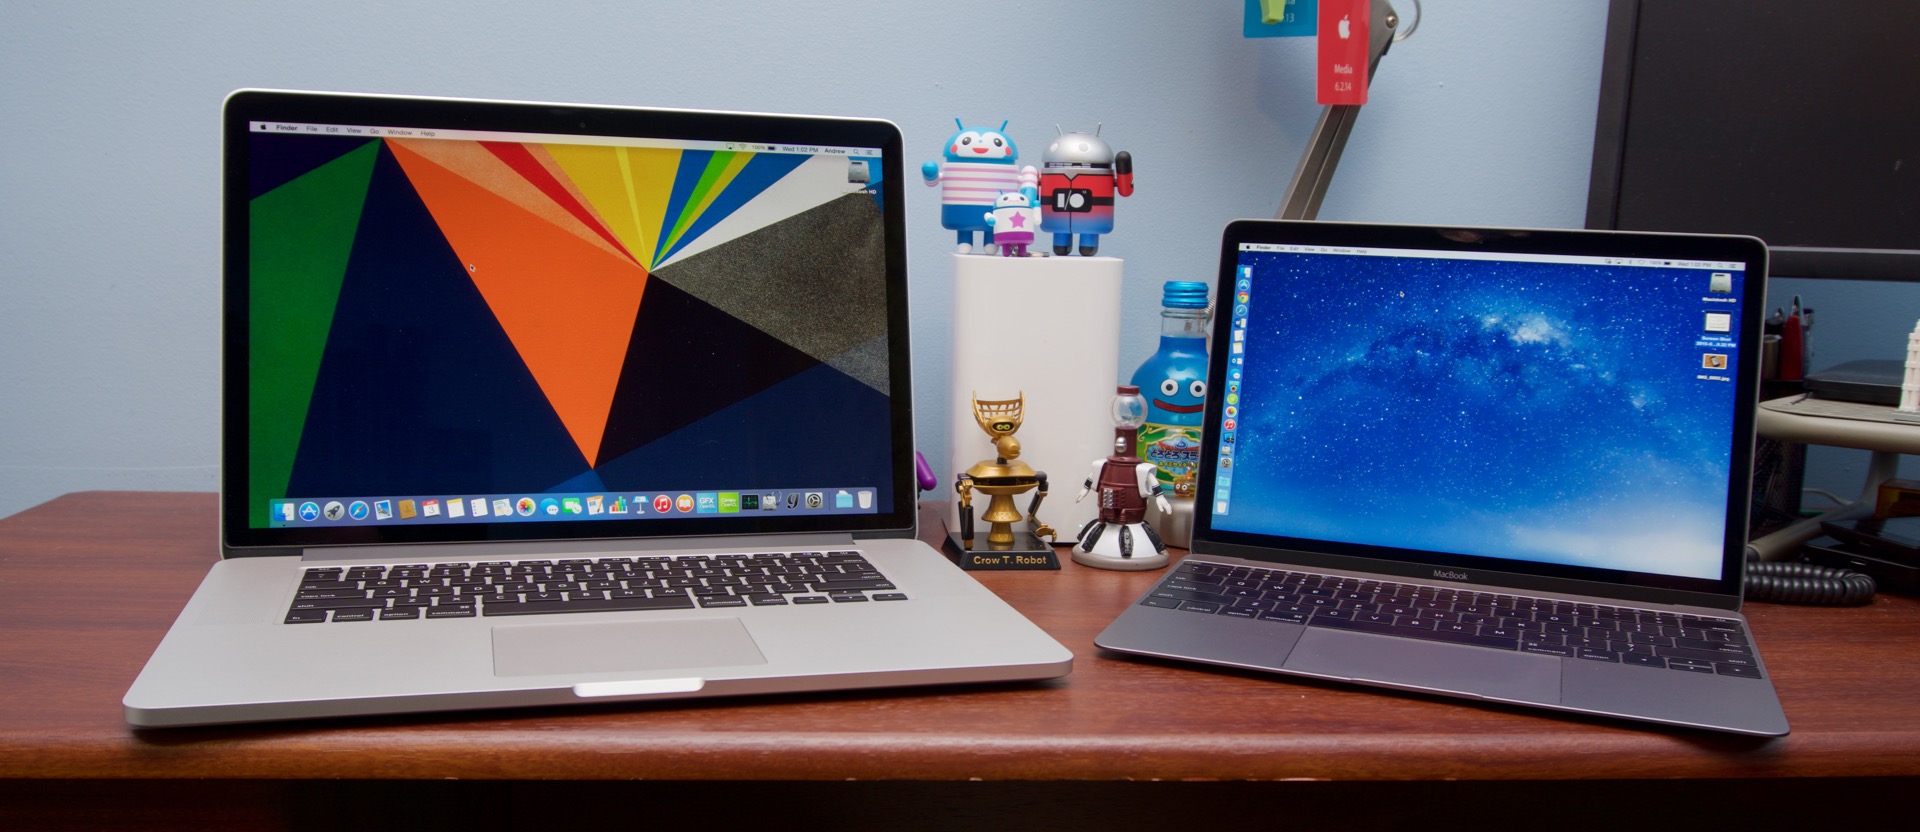 apple macbook pro 15 inch retina display gaming with jen